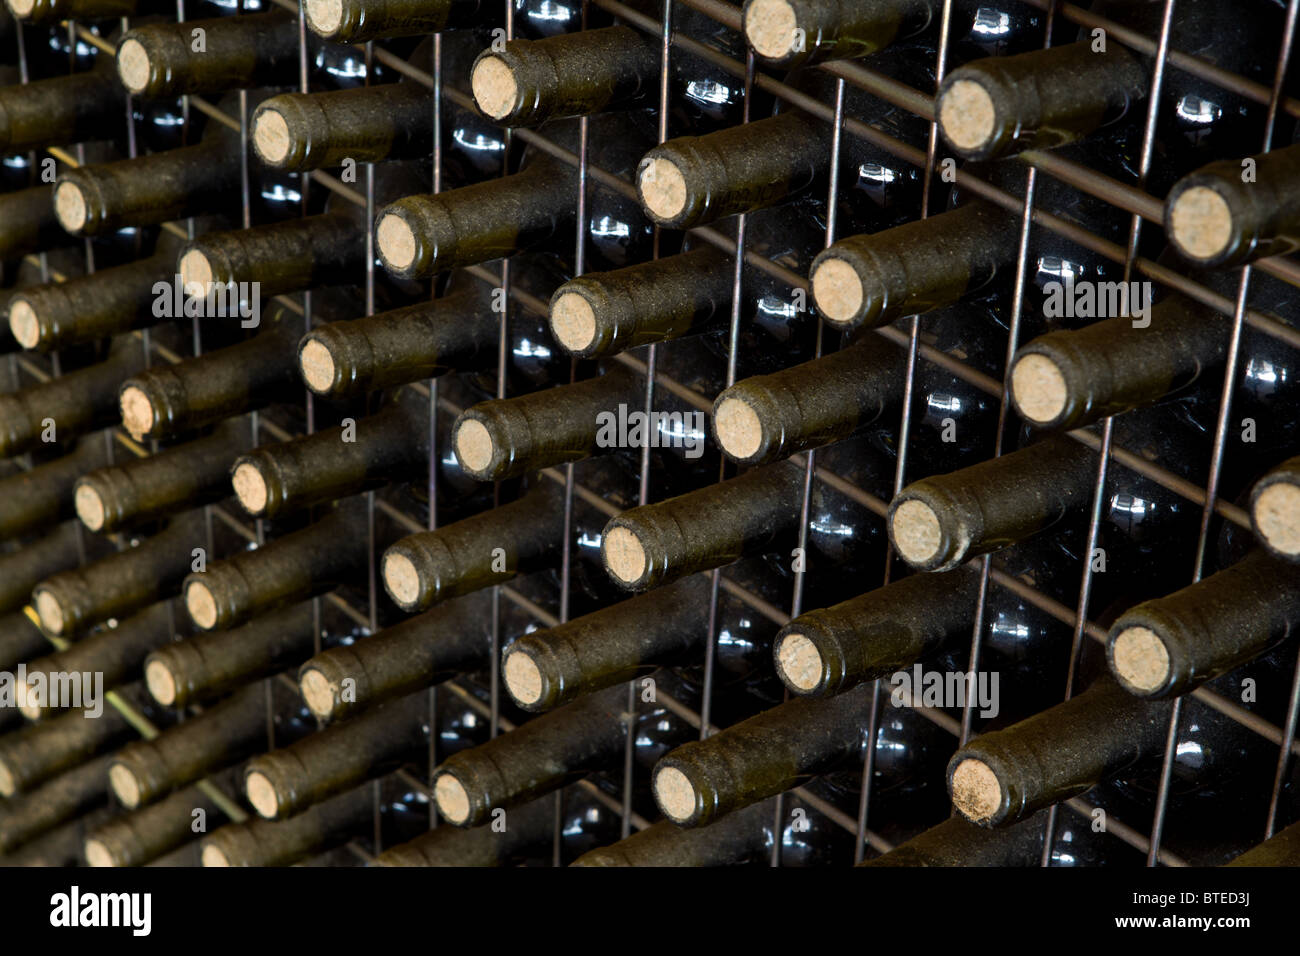 Wine bottles stored in a wine cellar in Spain Stock Photo